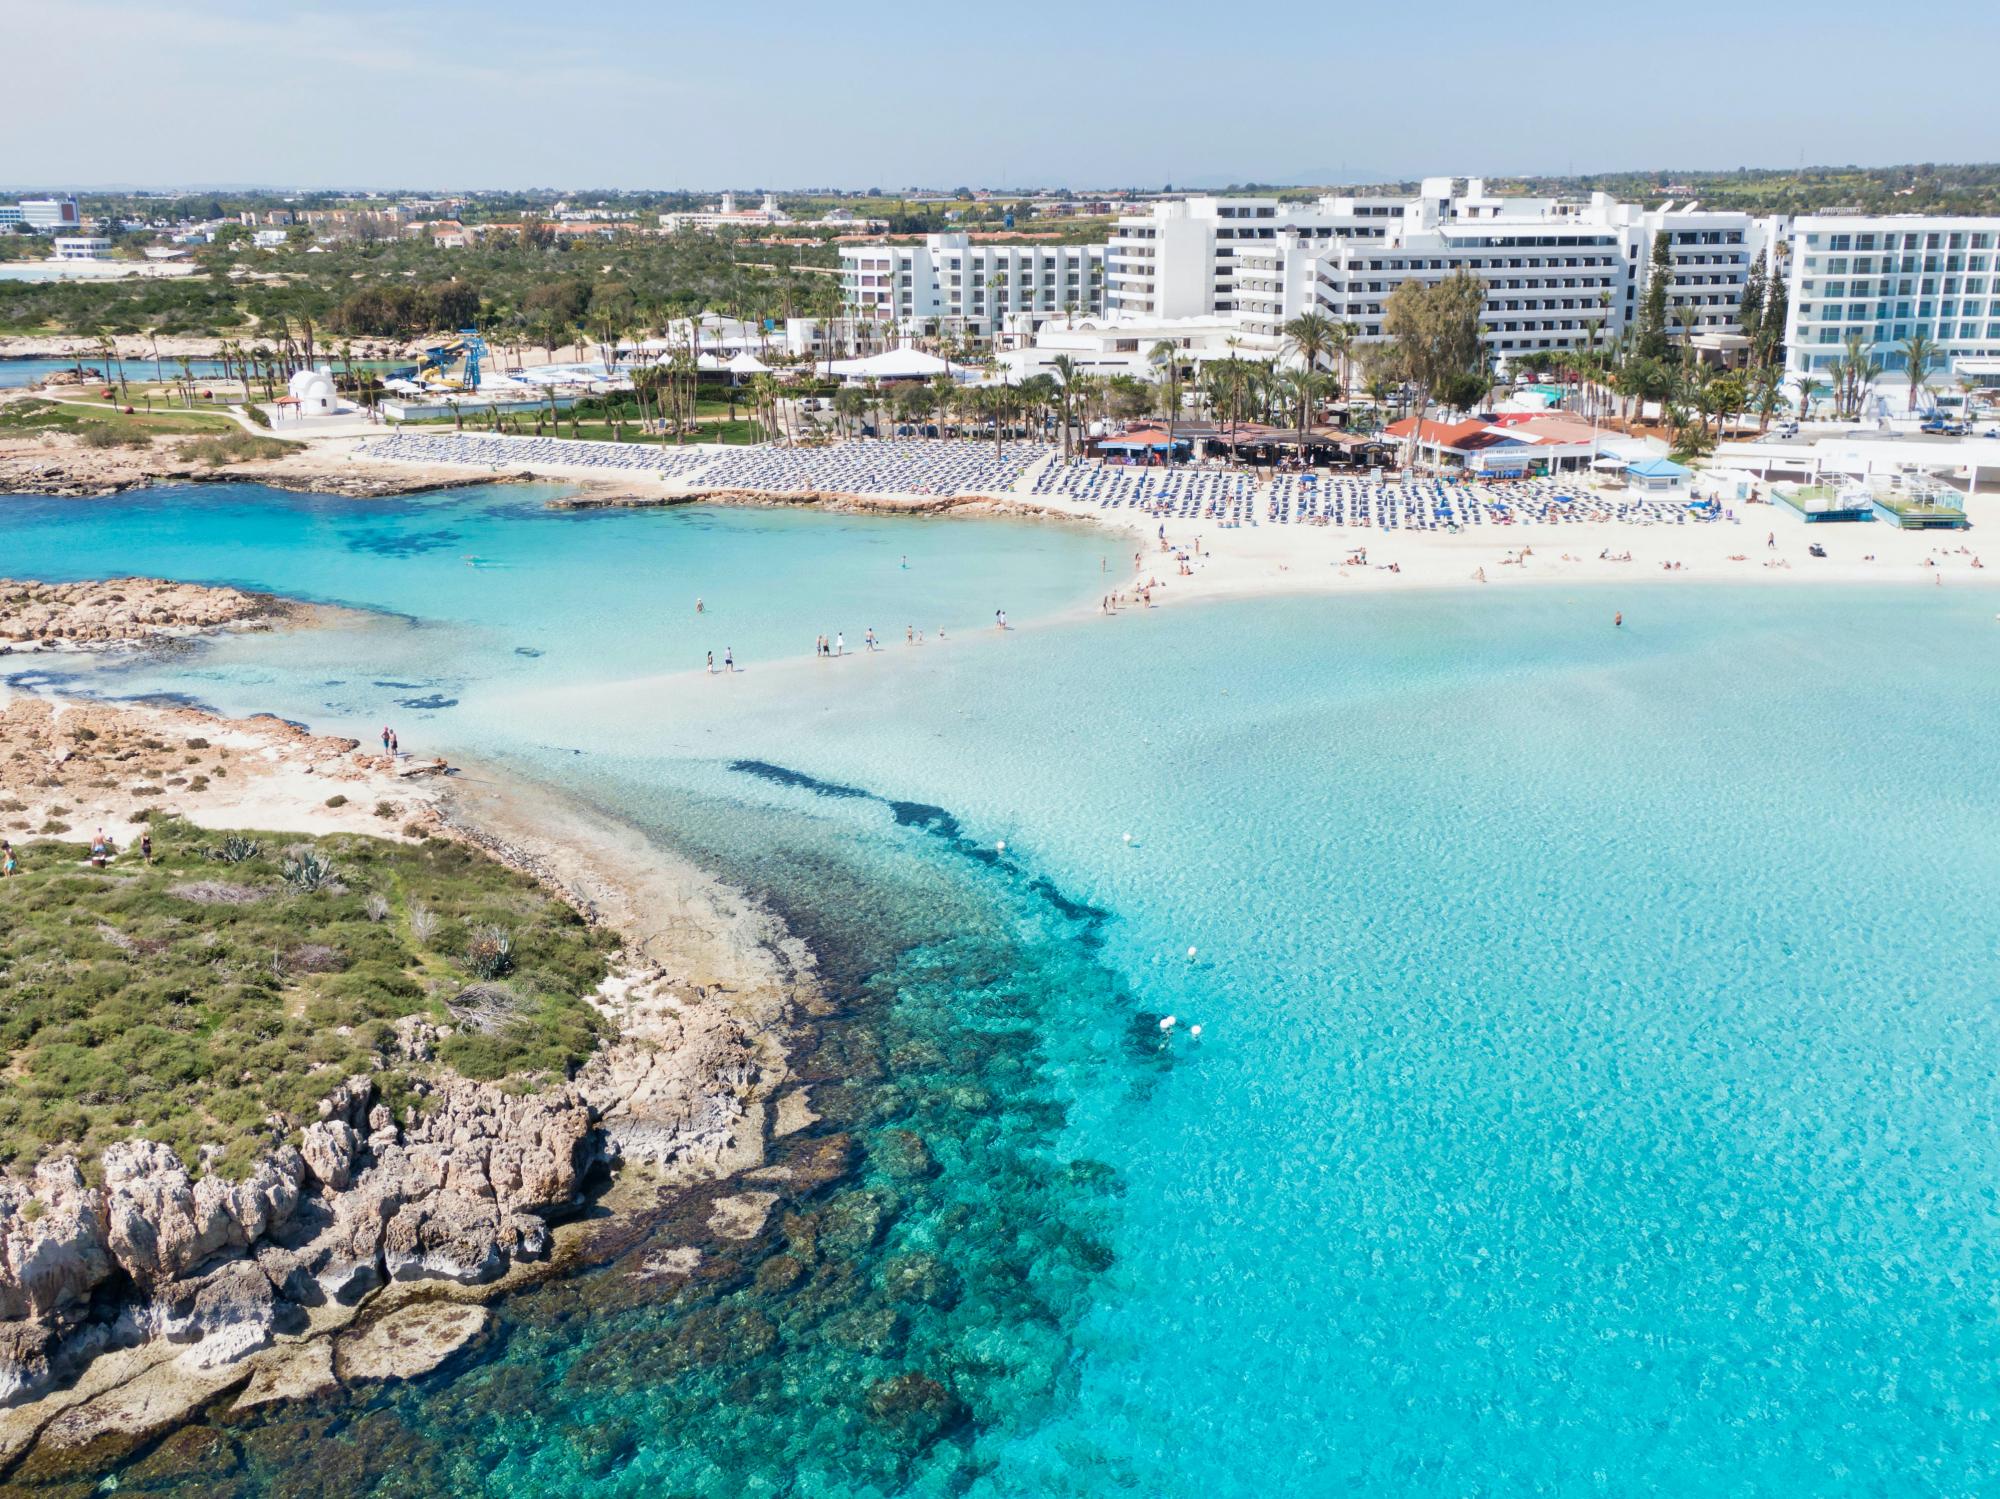 Cyprus 55m Luxury Hotels 